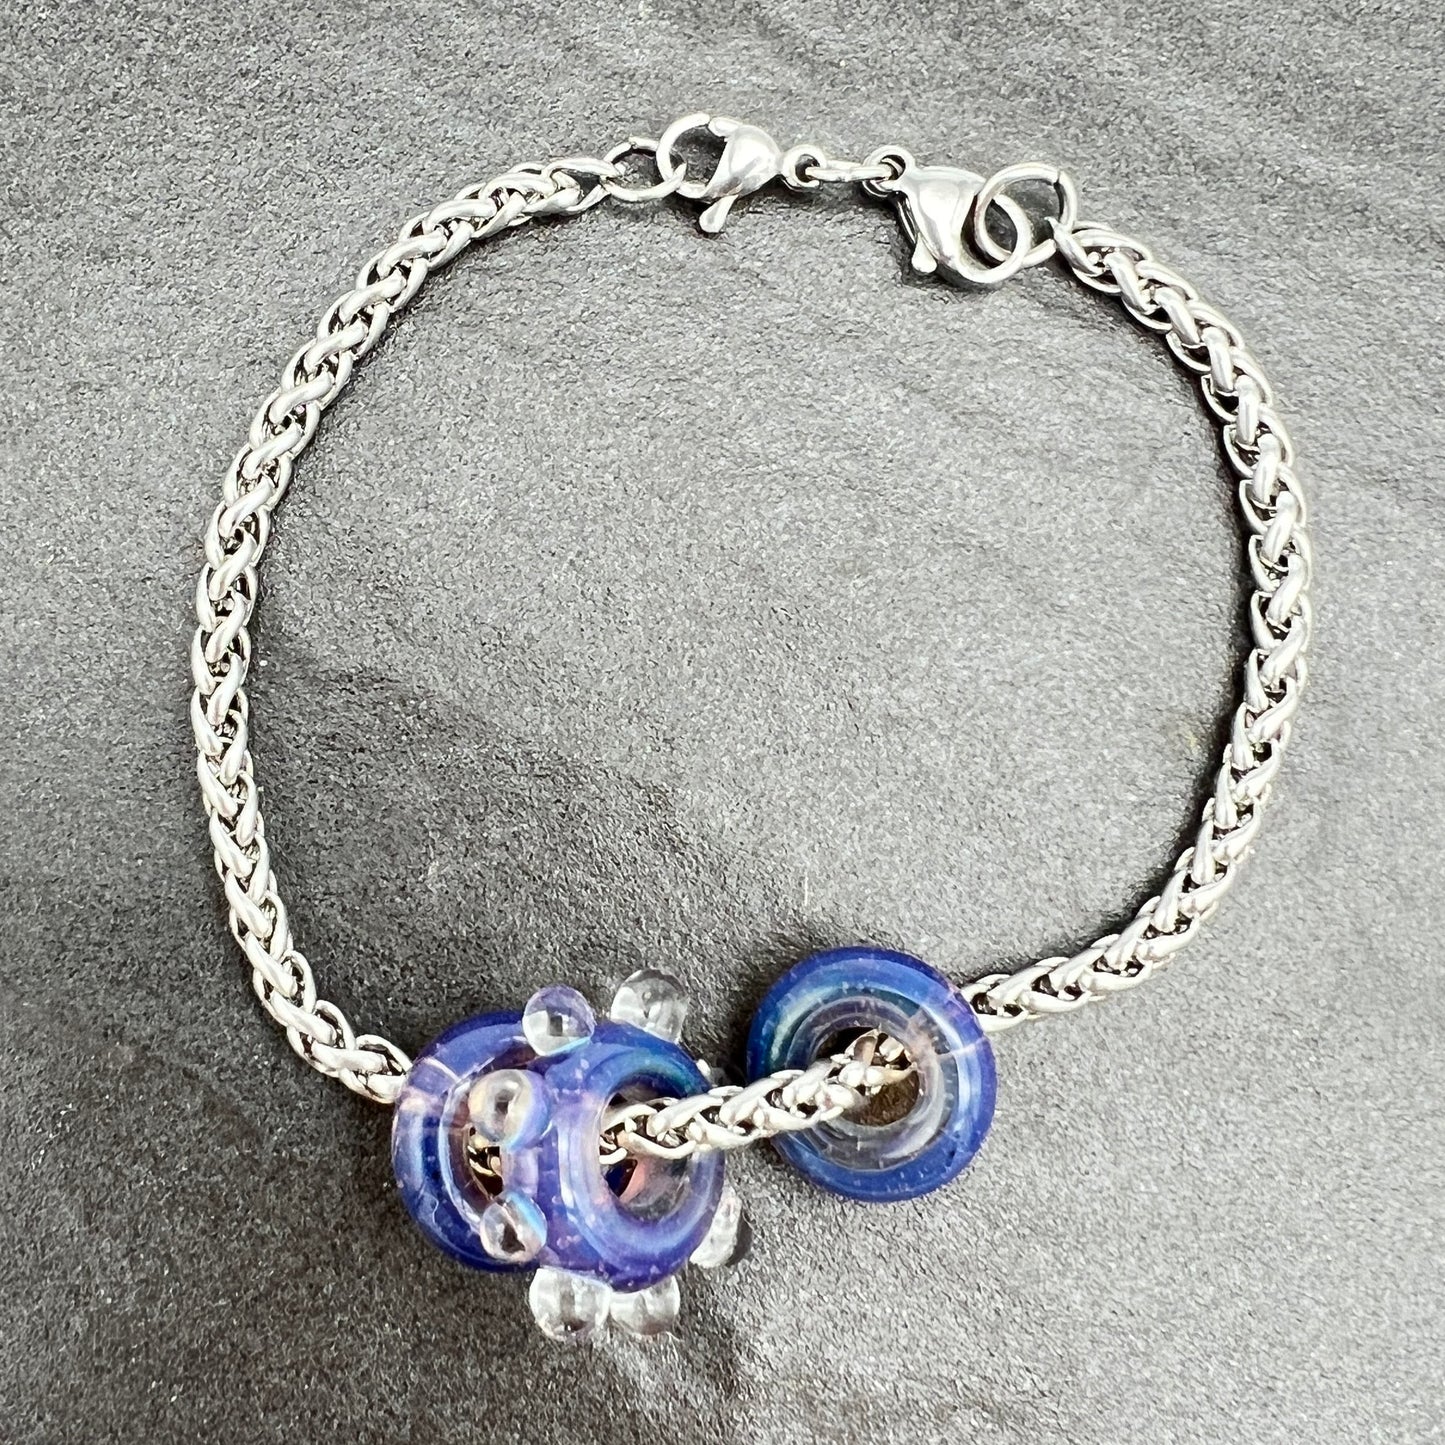 Bracelet with 3 purple iris water droplet glass beads